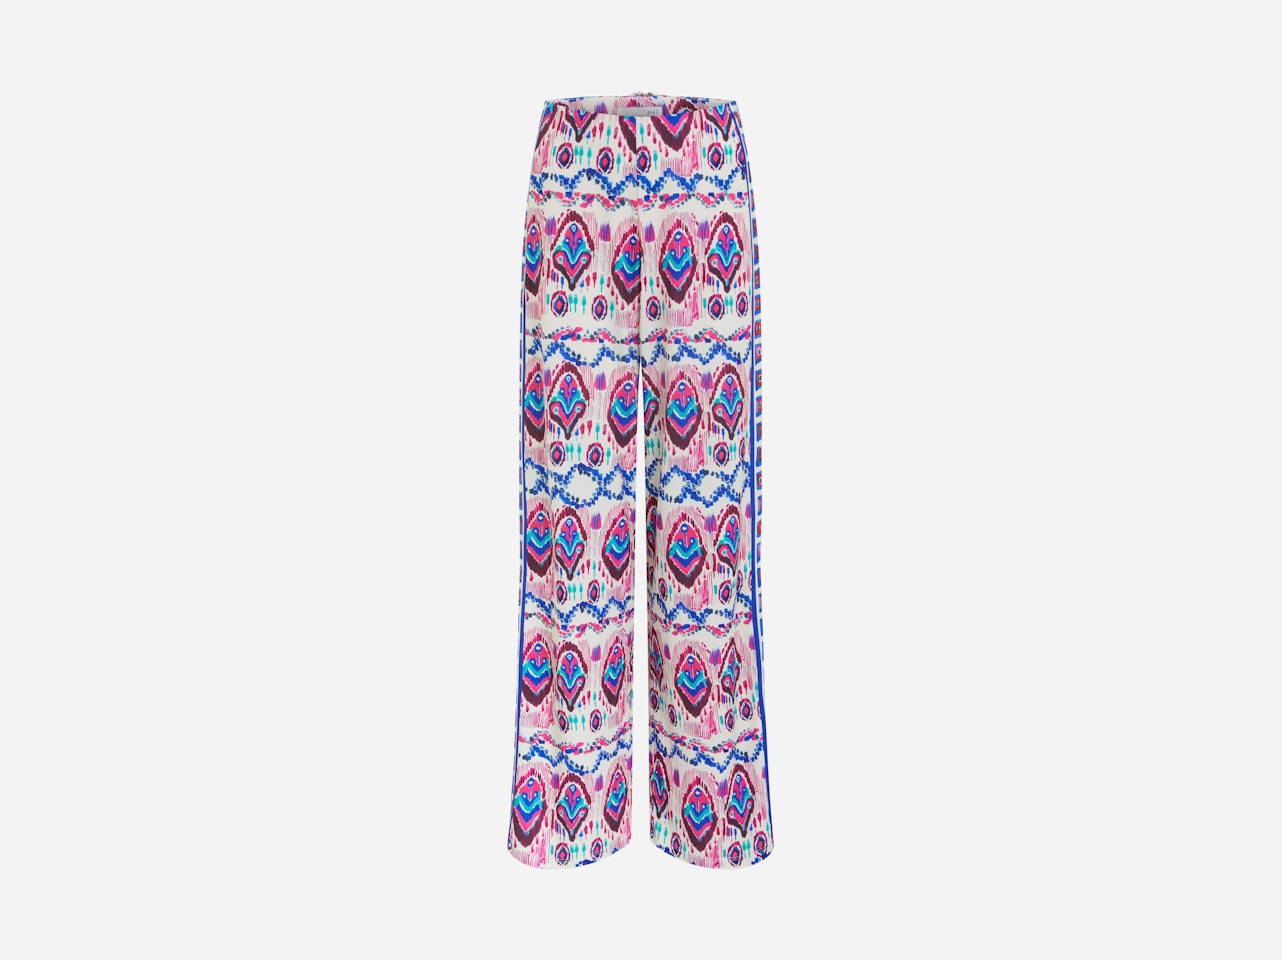 Slinky trousers in trendy print